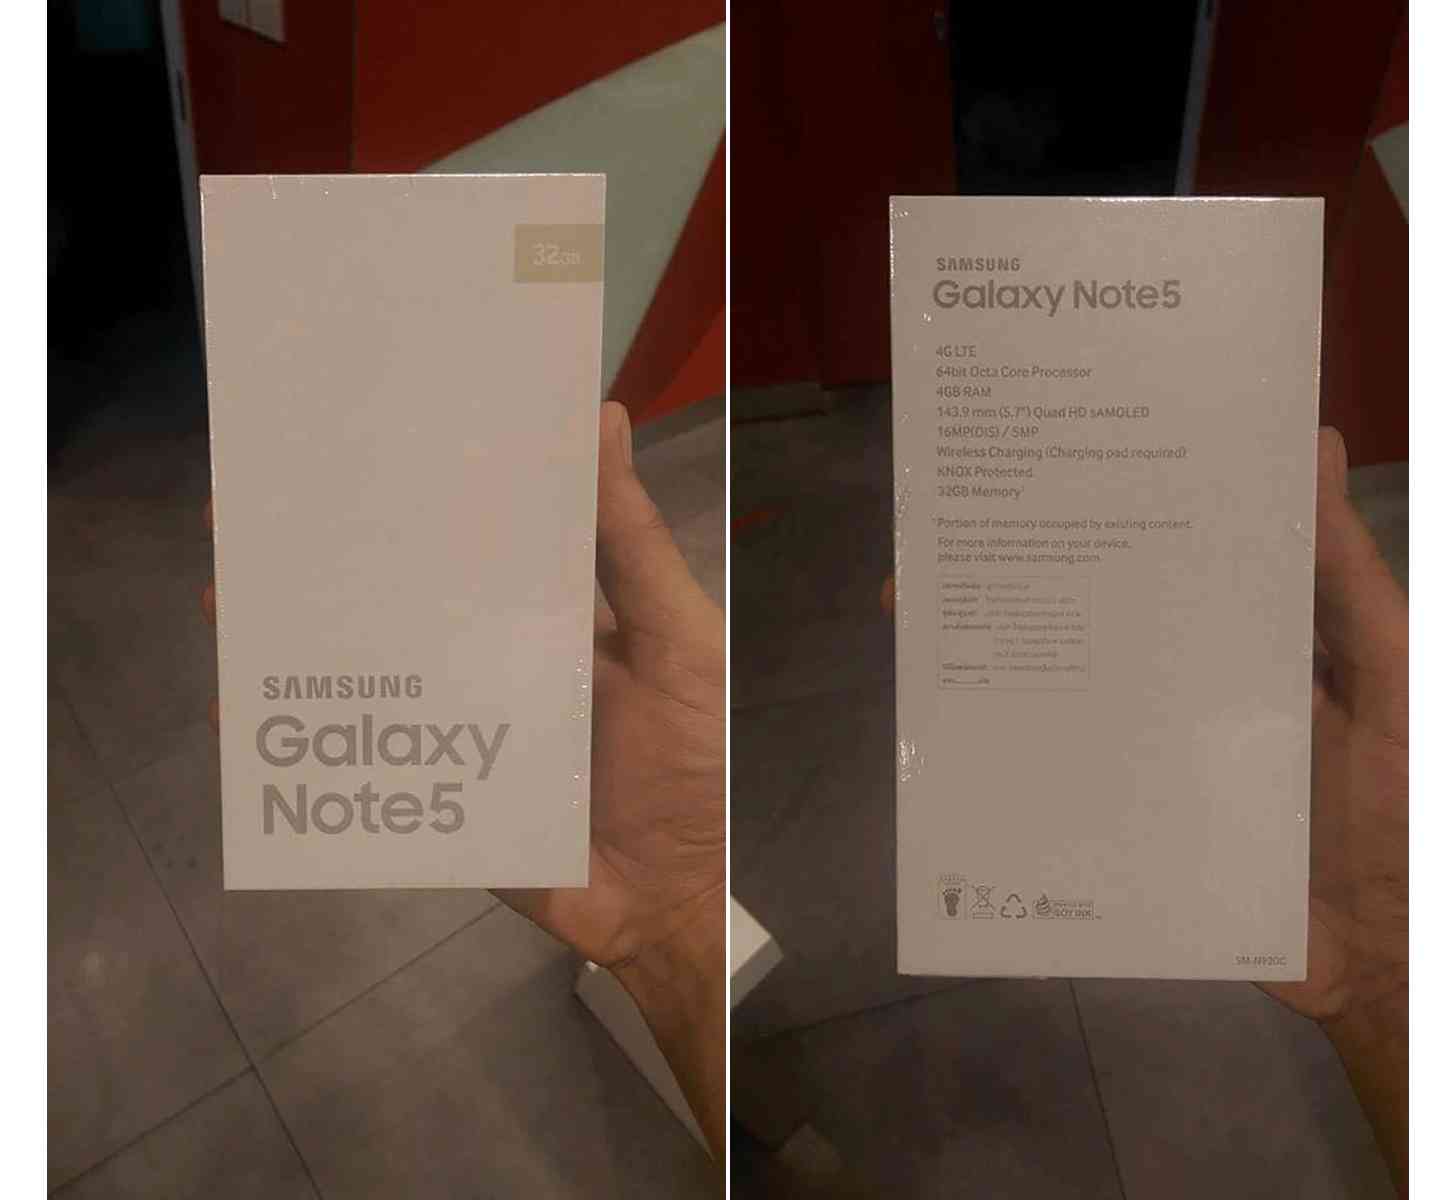 Samsung Galaxy Note 5 retail packaging leak